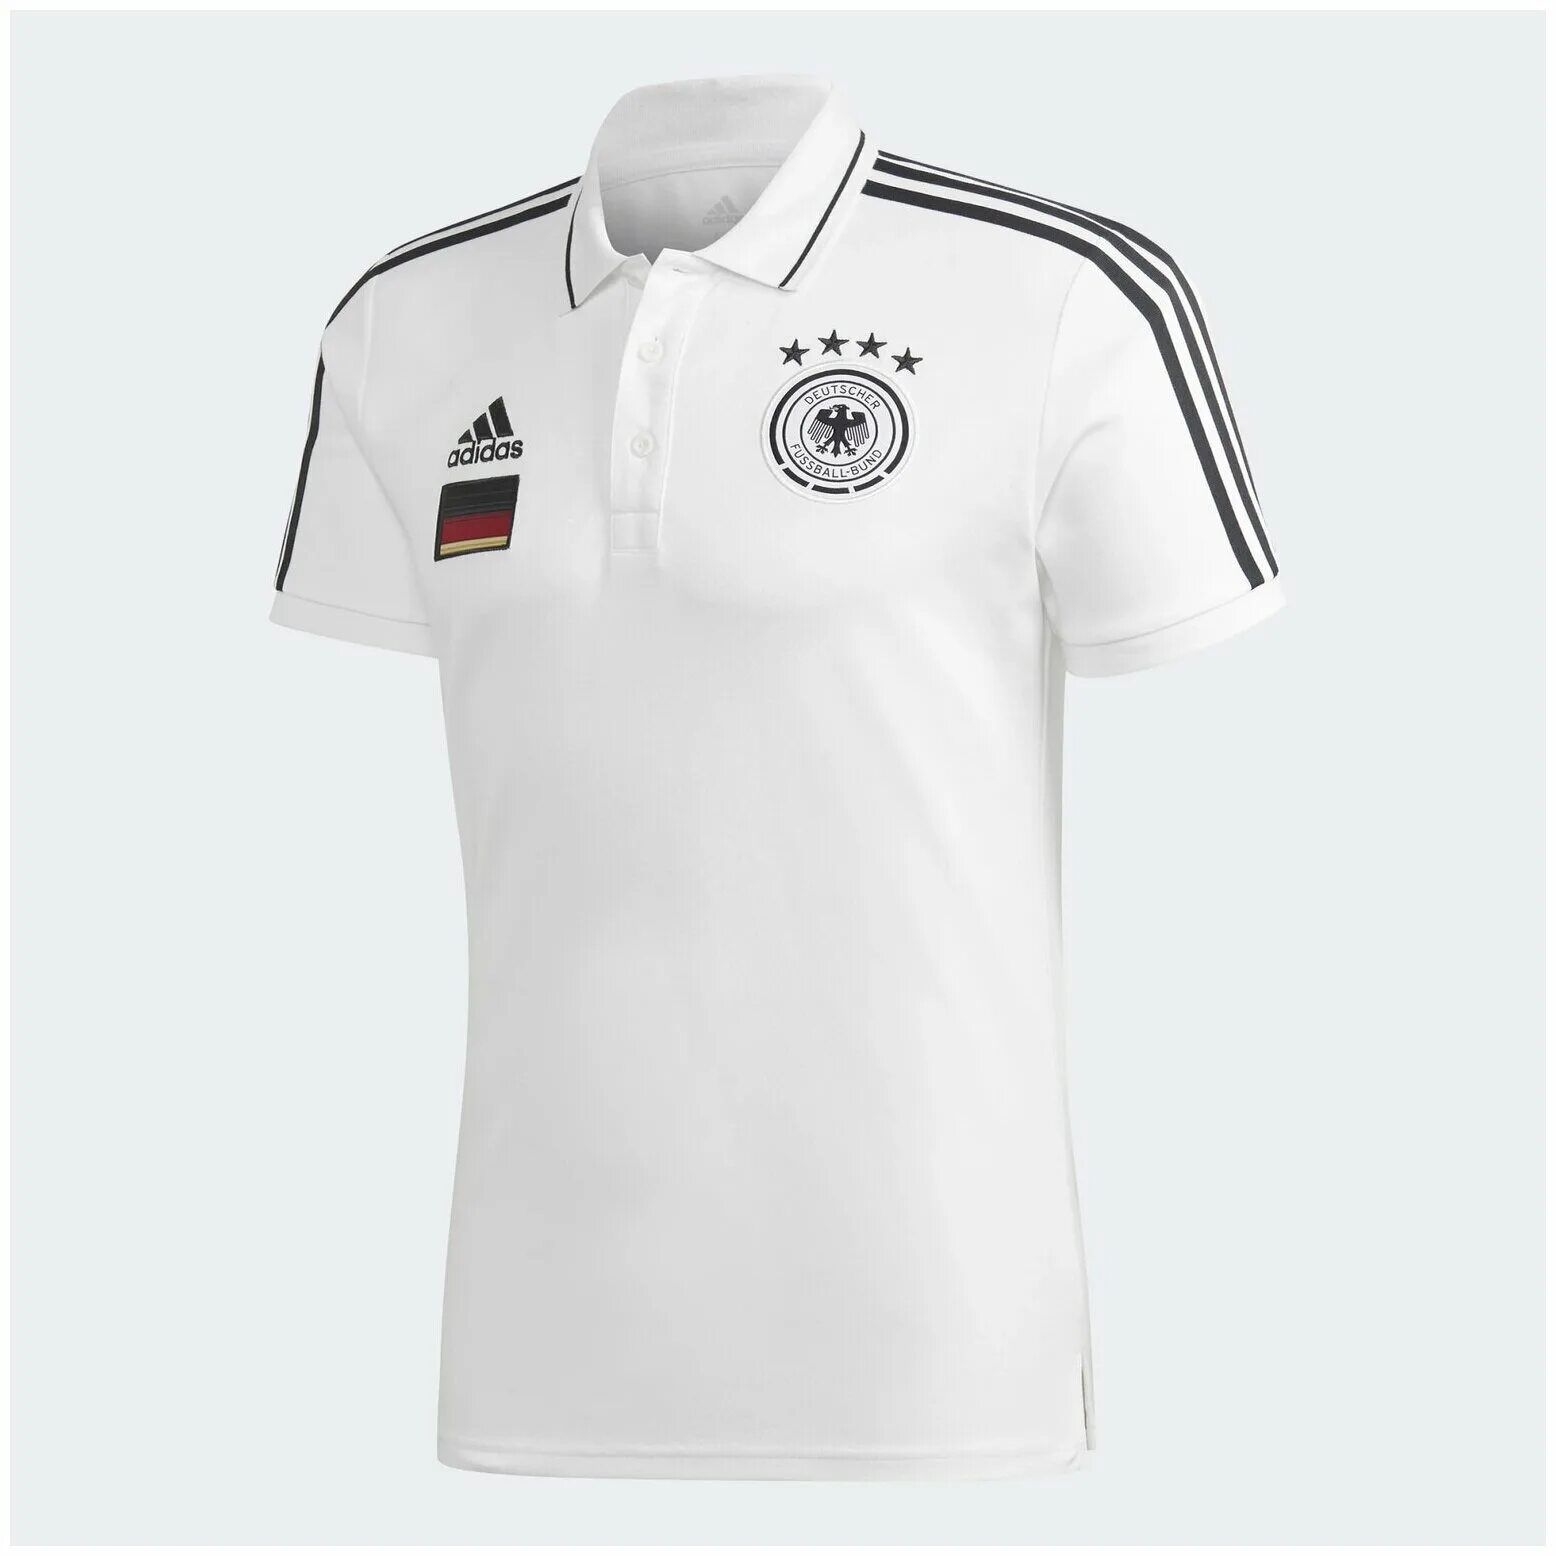 Adidas Germany Polo. Поло adidas DFB. Адидас 2020 поло мужское белое. Deutscher Fussball Bund футболка адидас. Адидас сборная германии